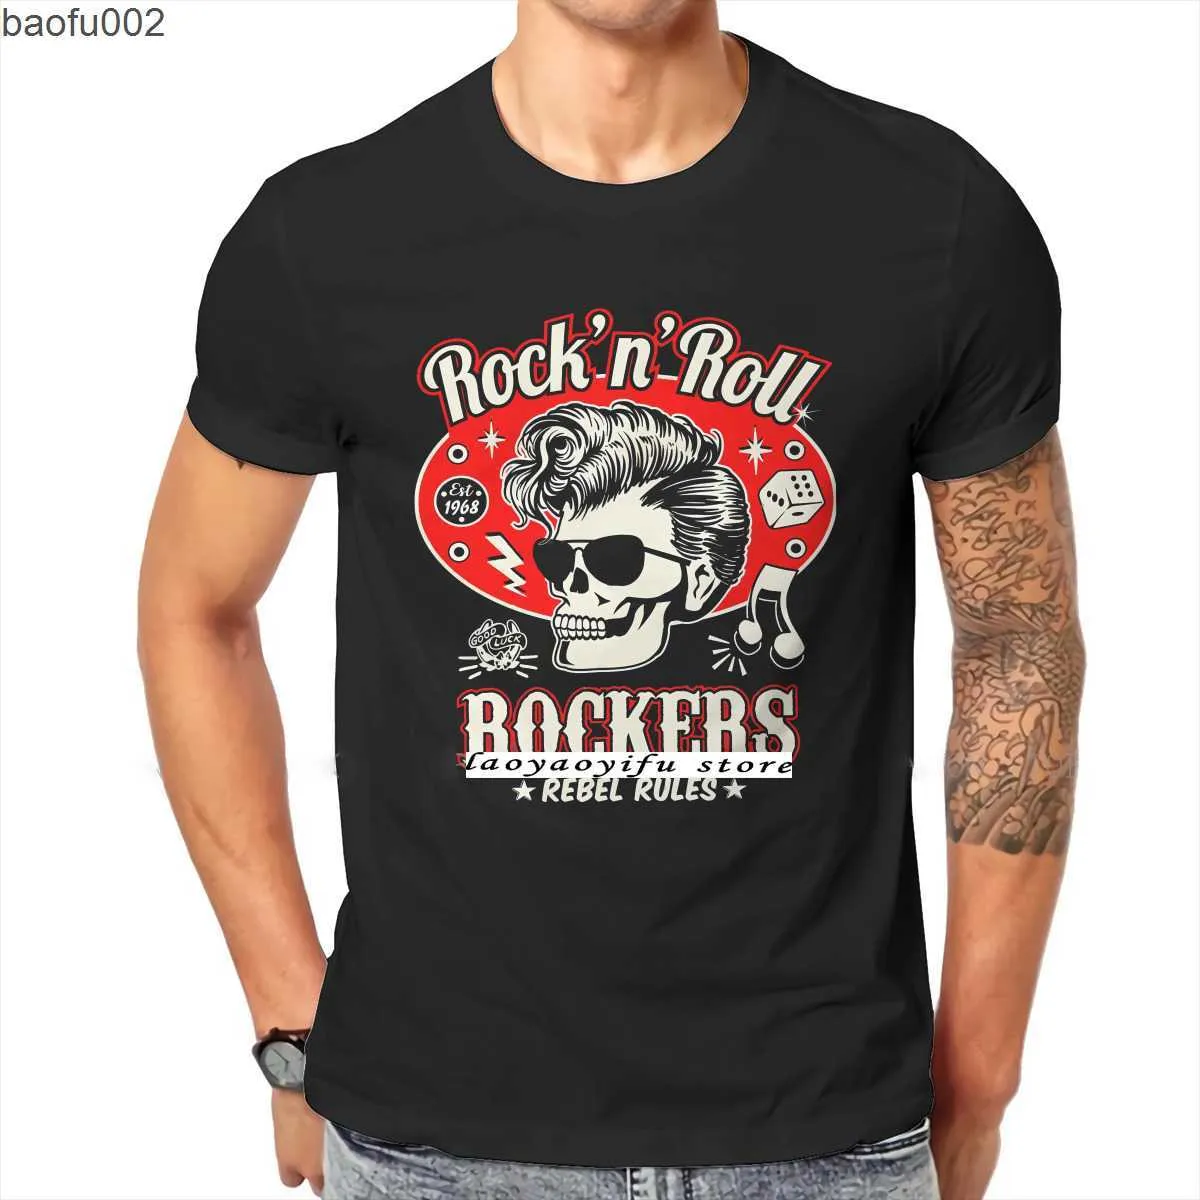 Men's T-Shirts Gothic Rockabilly Rock and Roll Creative TShirt Cool Men Skull Dice Rockers Graphic Tshirts Male Fashion Hip-hop Tops XS-4XL W0224